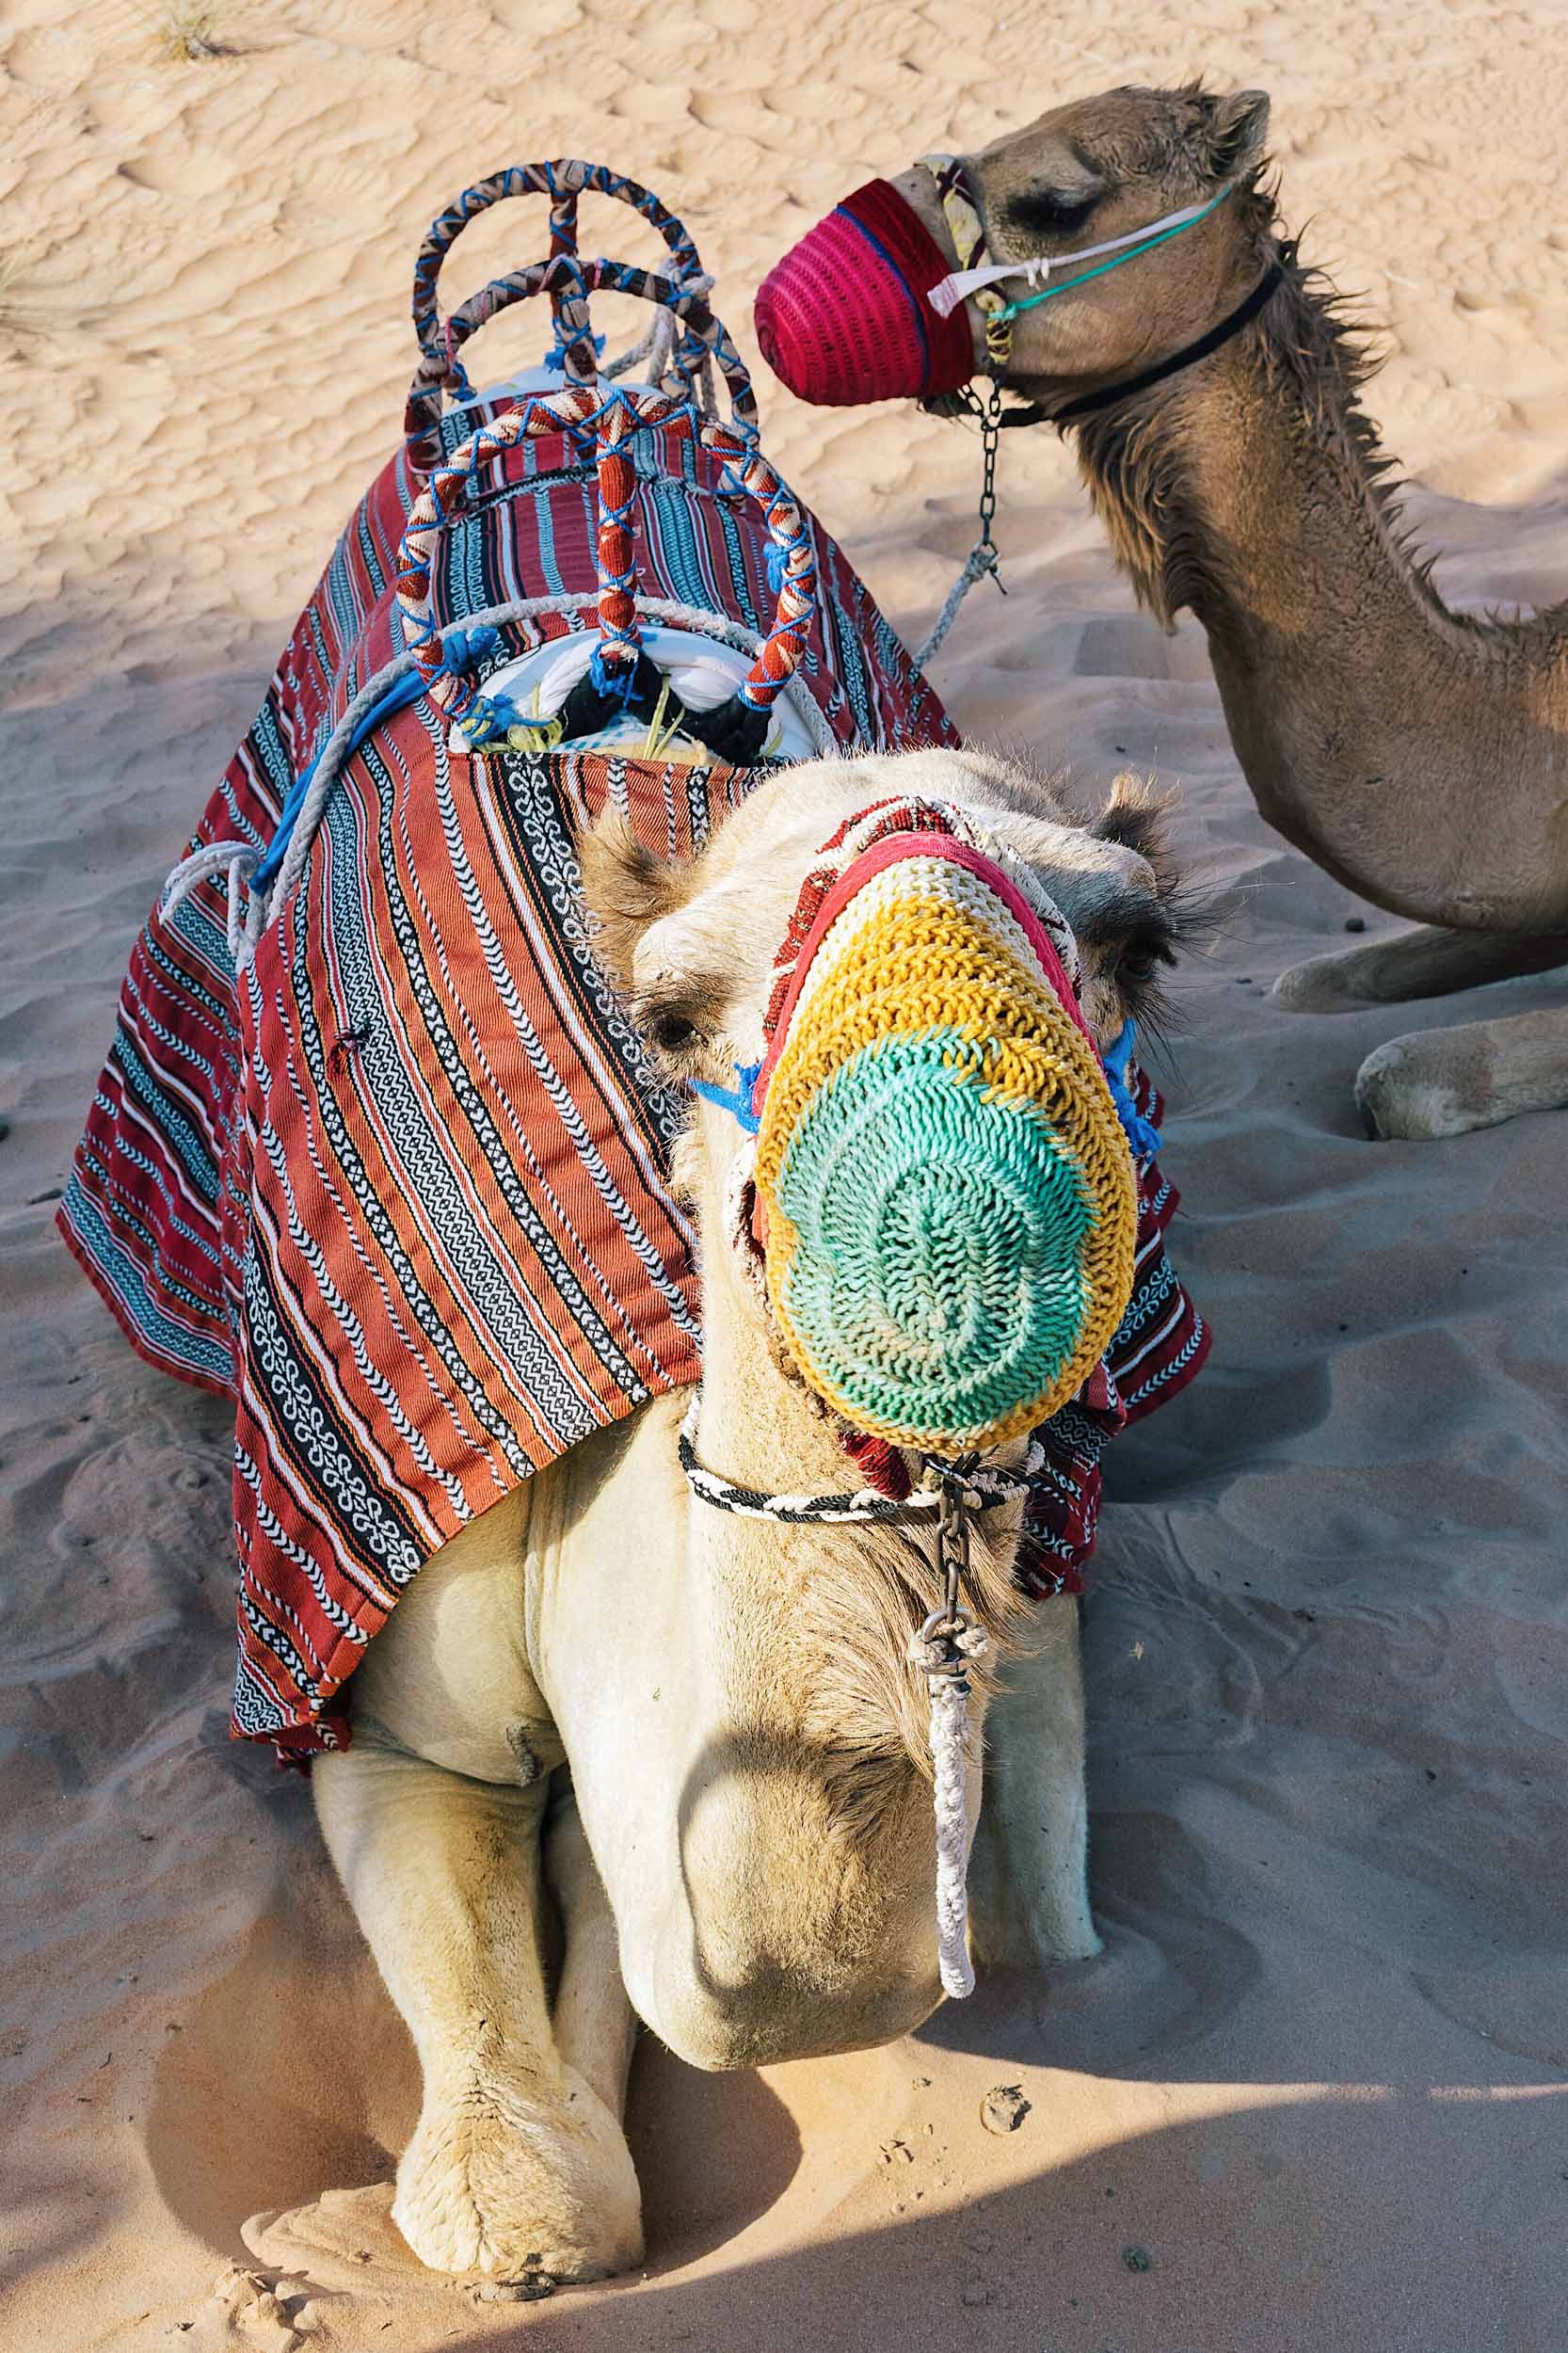 Riding camels at a desert safari in Dubai